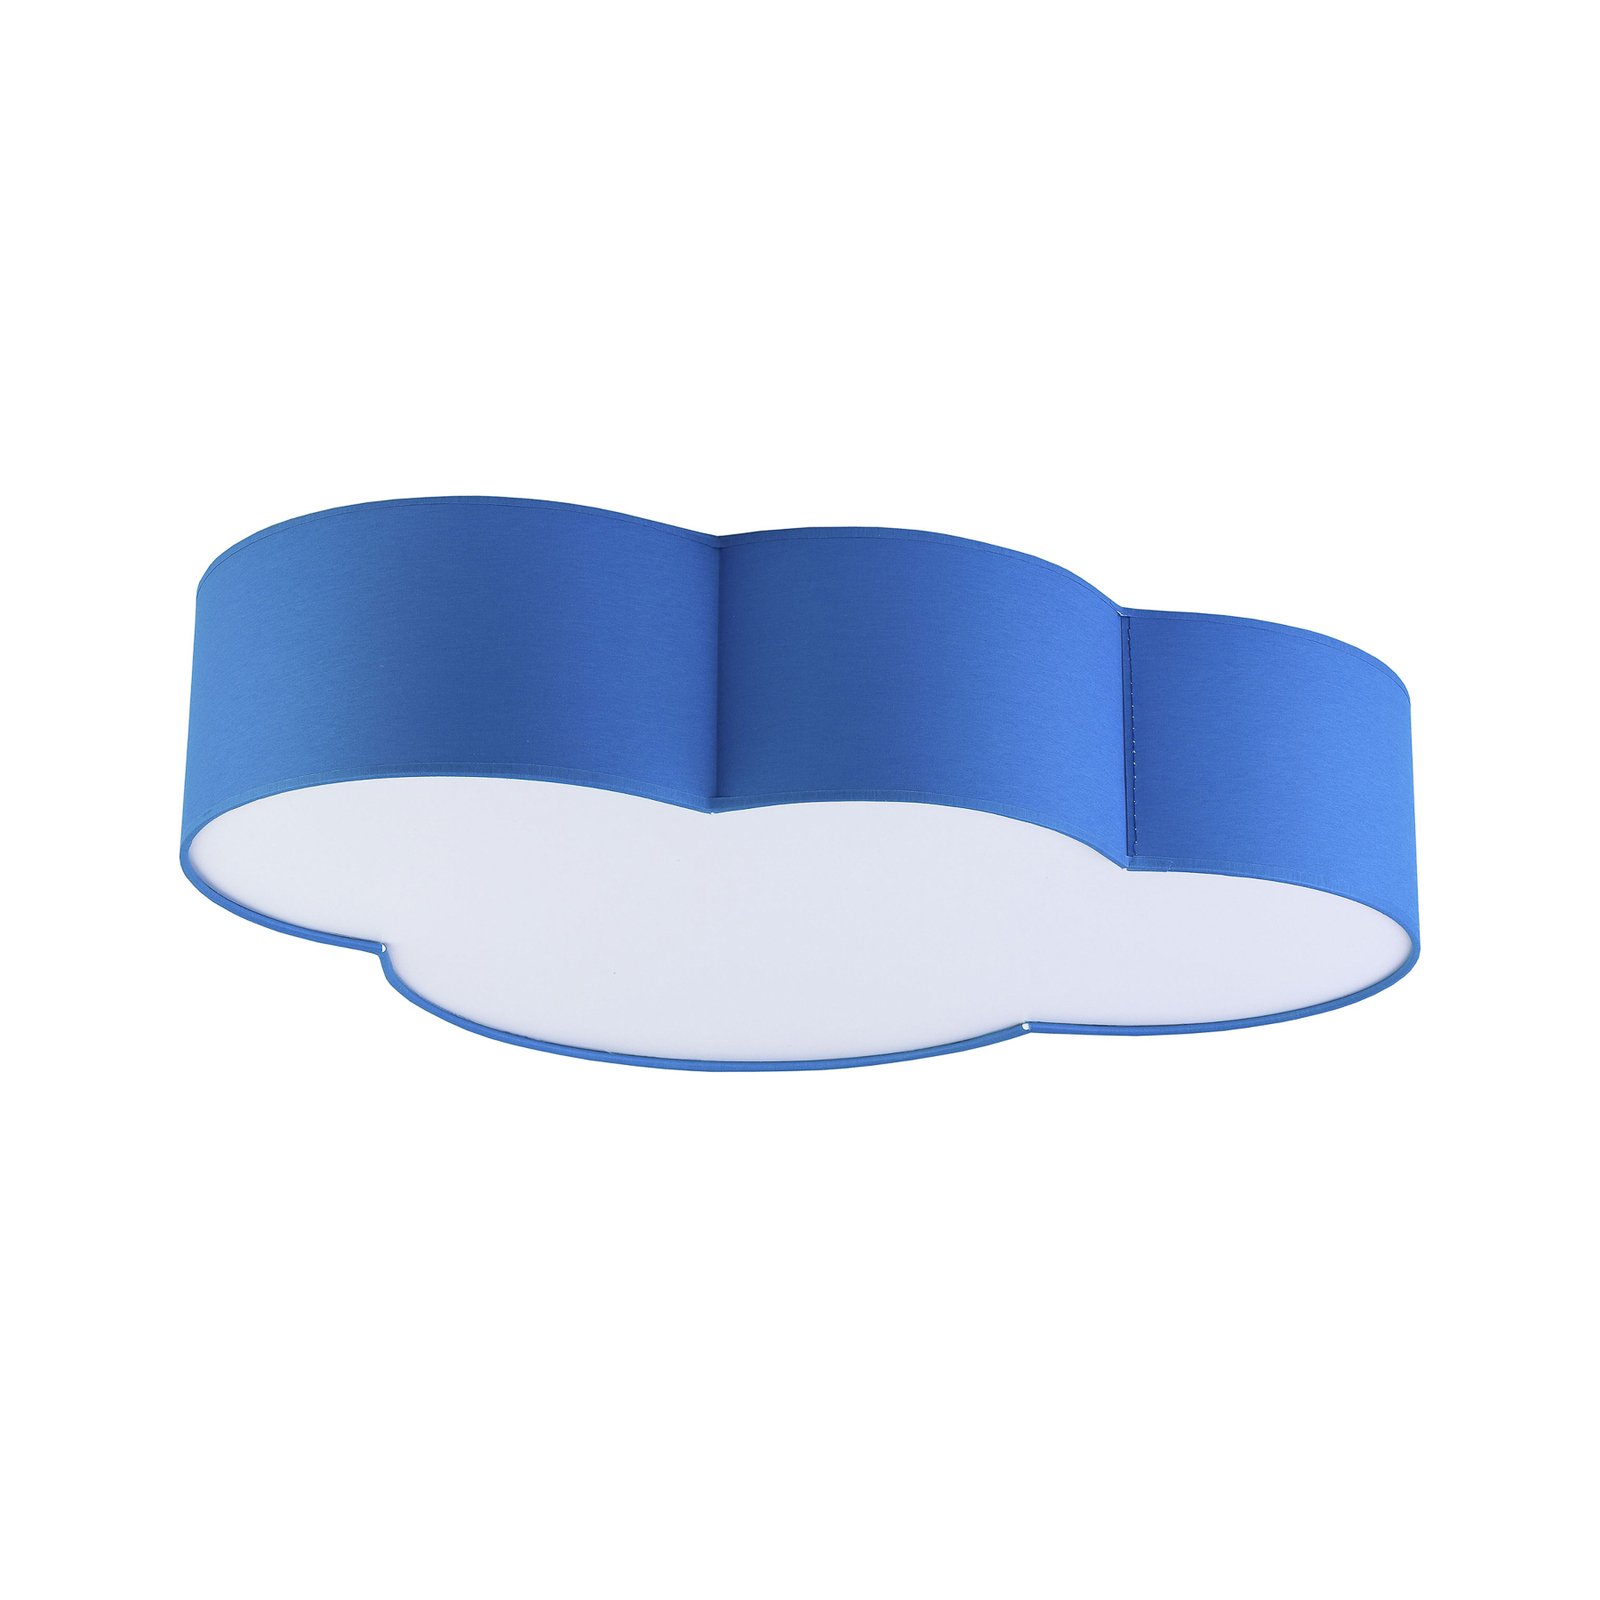 Candeeiro de teto Cloud, têxtil, 62 x 45 cm, azul